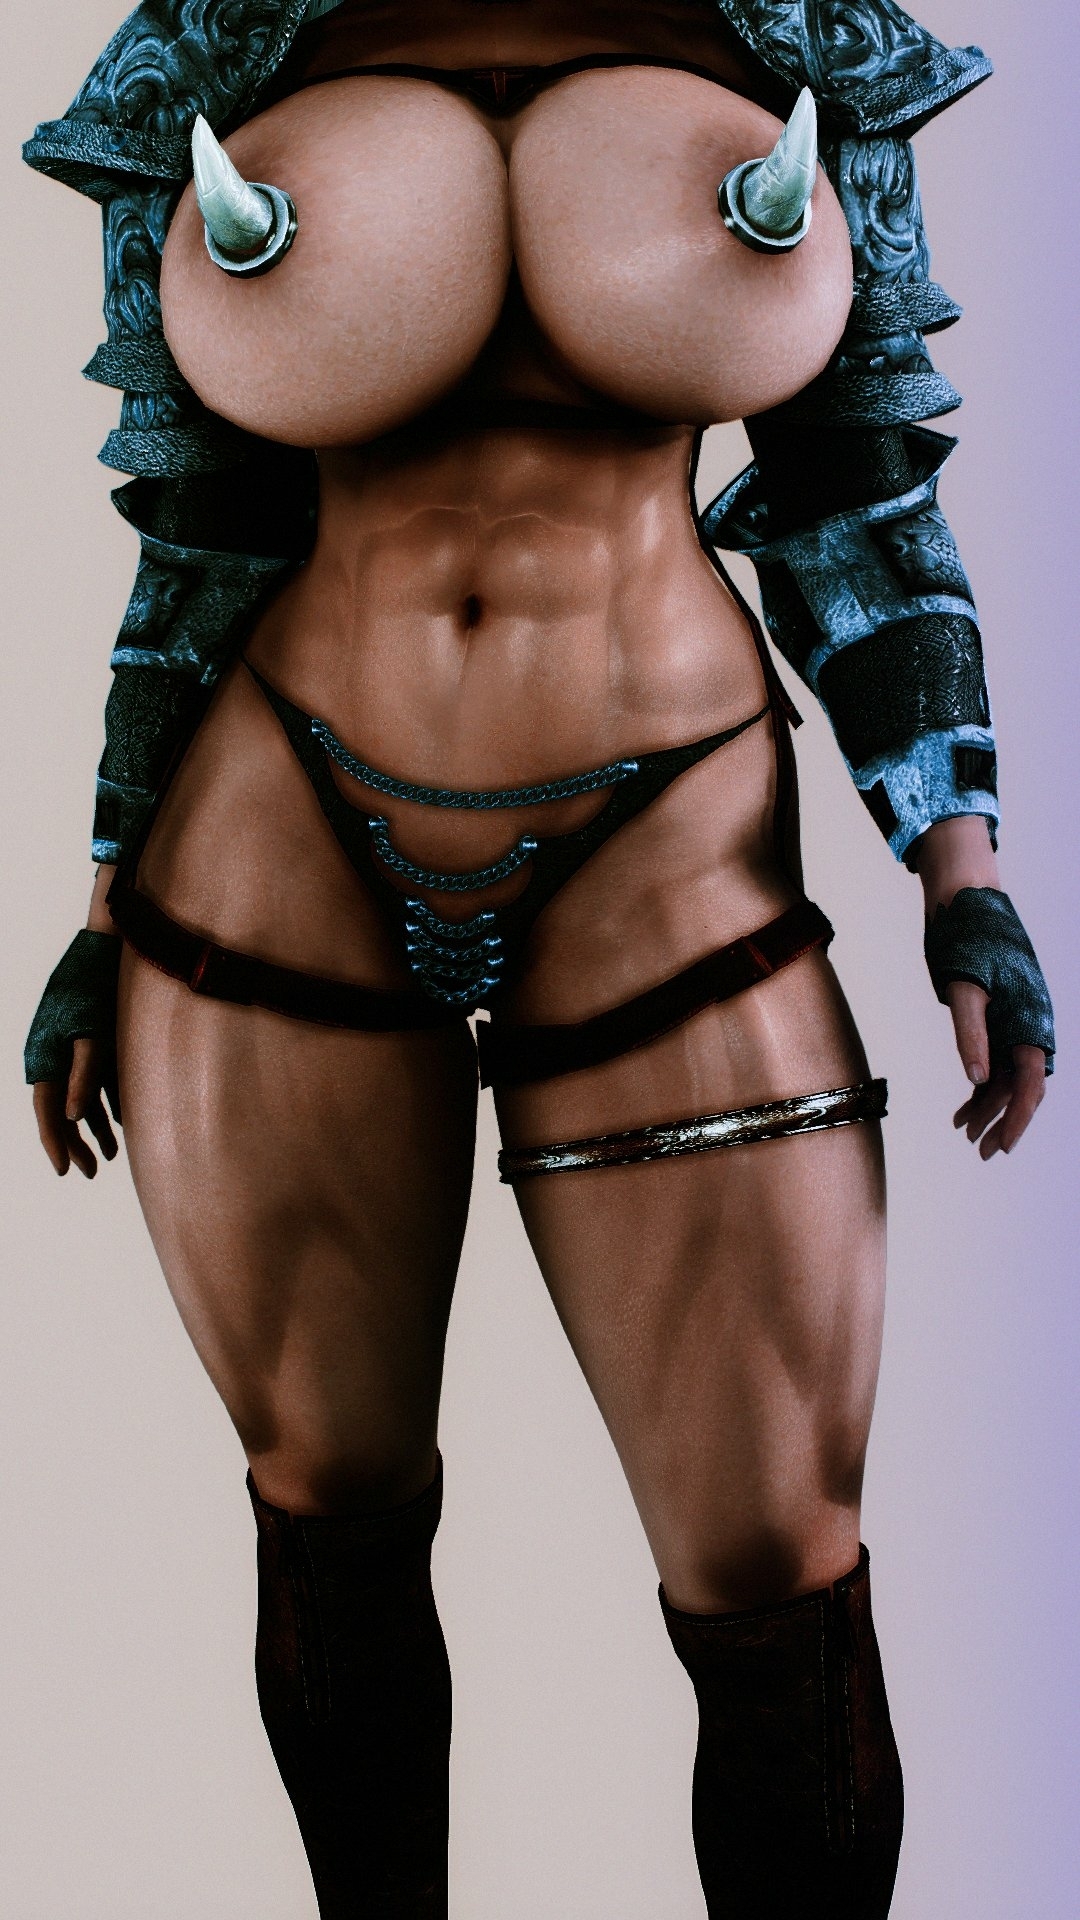 Hot Amazon female warrior muscular body with big tits - Skyrim Sexy Modding Skyrim Sexy Big Tits Big Breasts Abs Nude Naked Amazon Viking Big Girl Pose 2